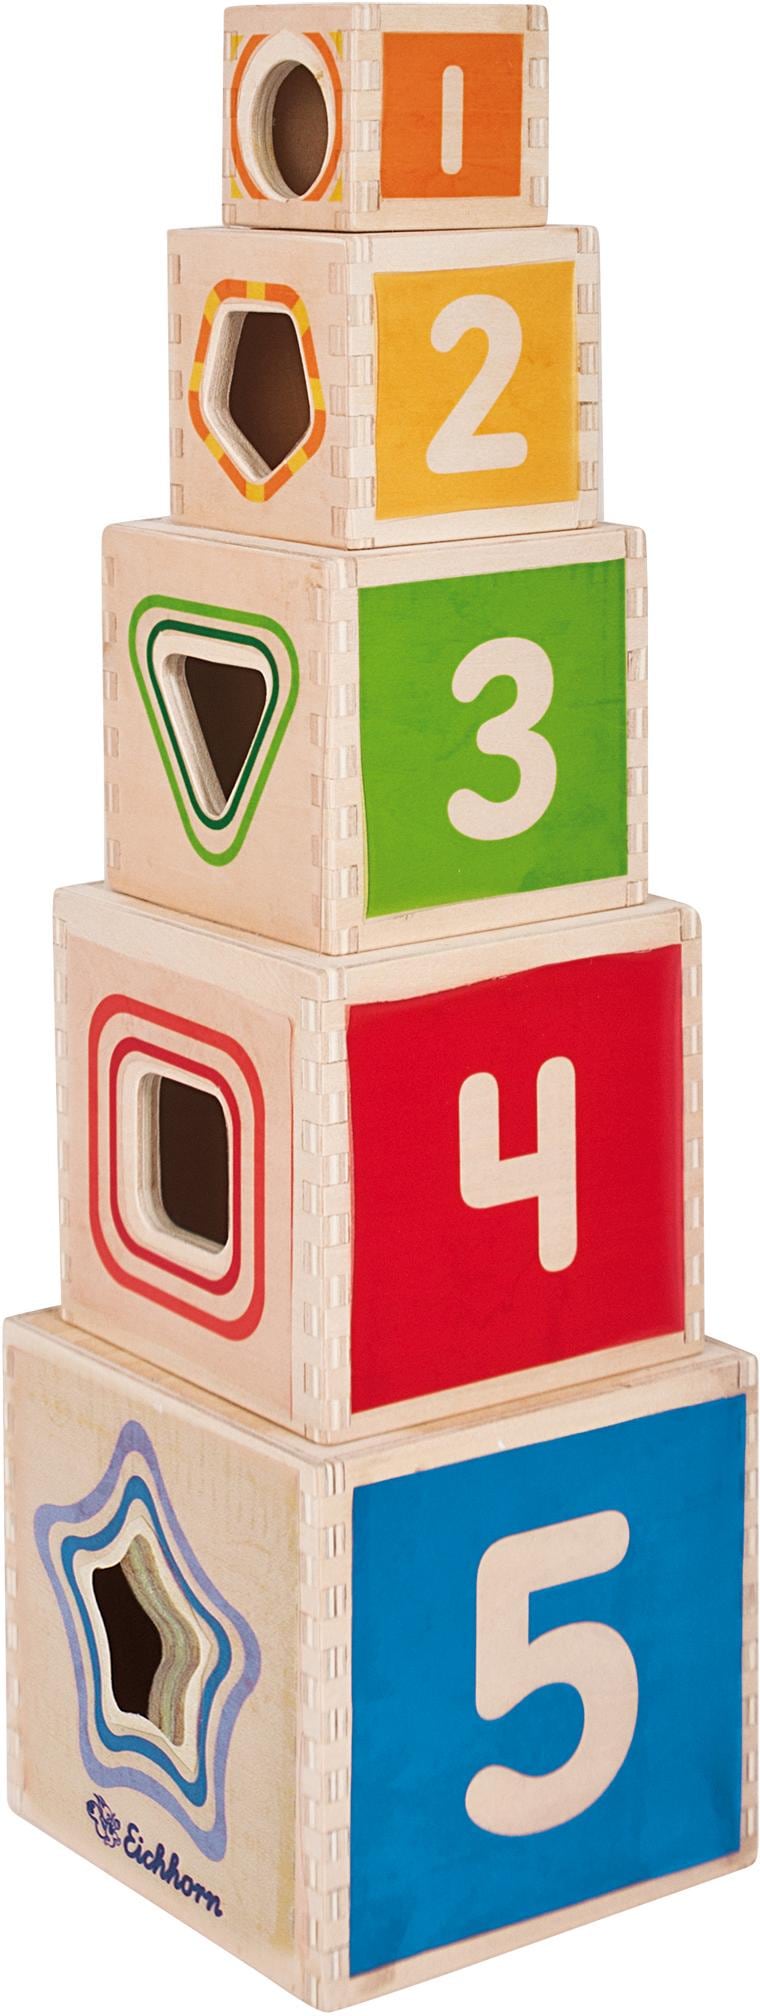 Eichhorn Stapelspielzeug »Steckturm«, aus Holz